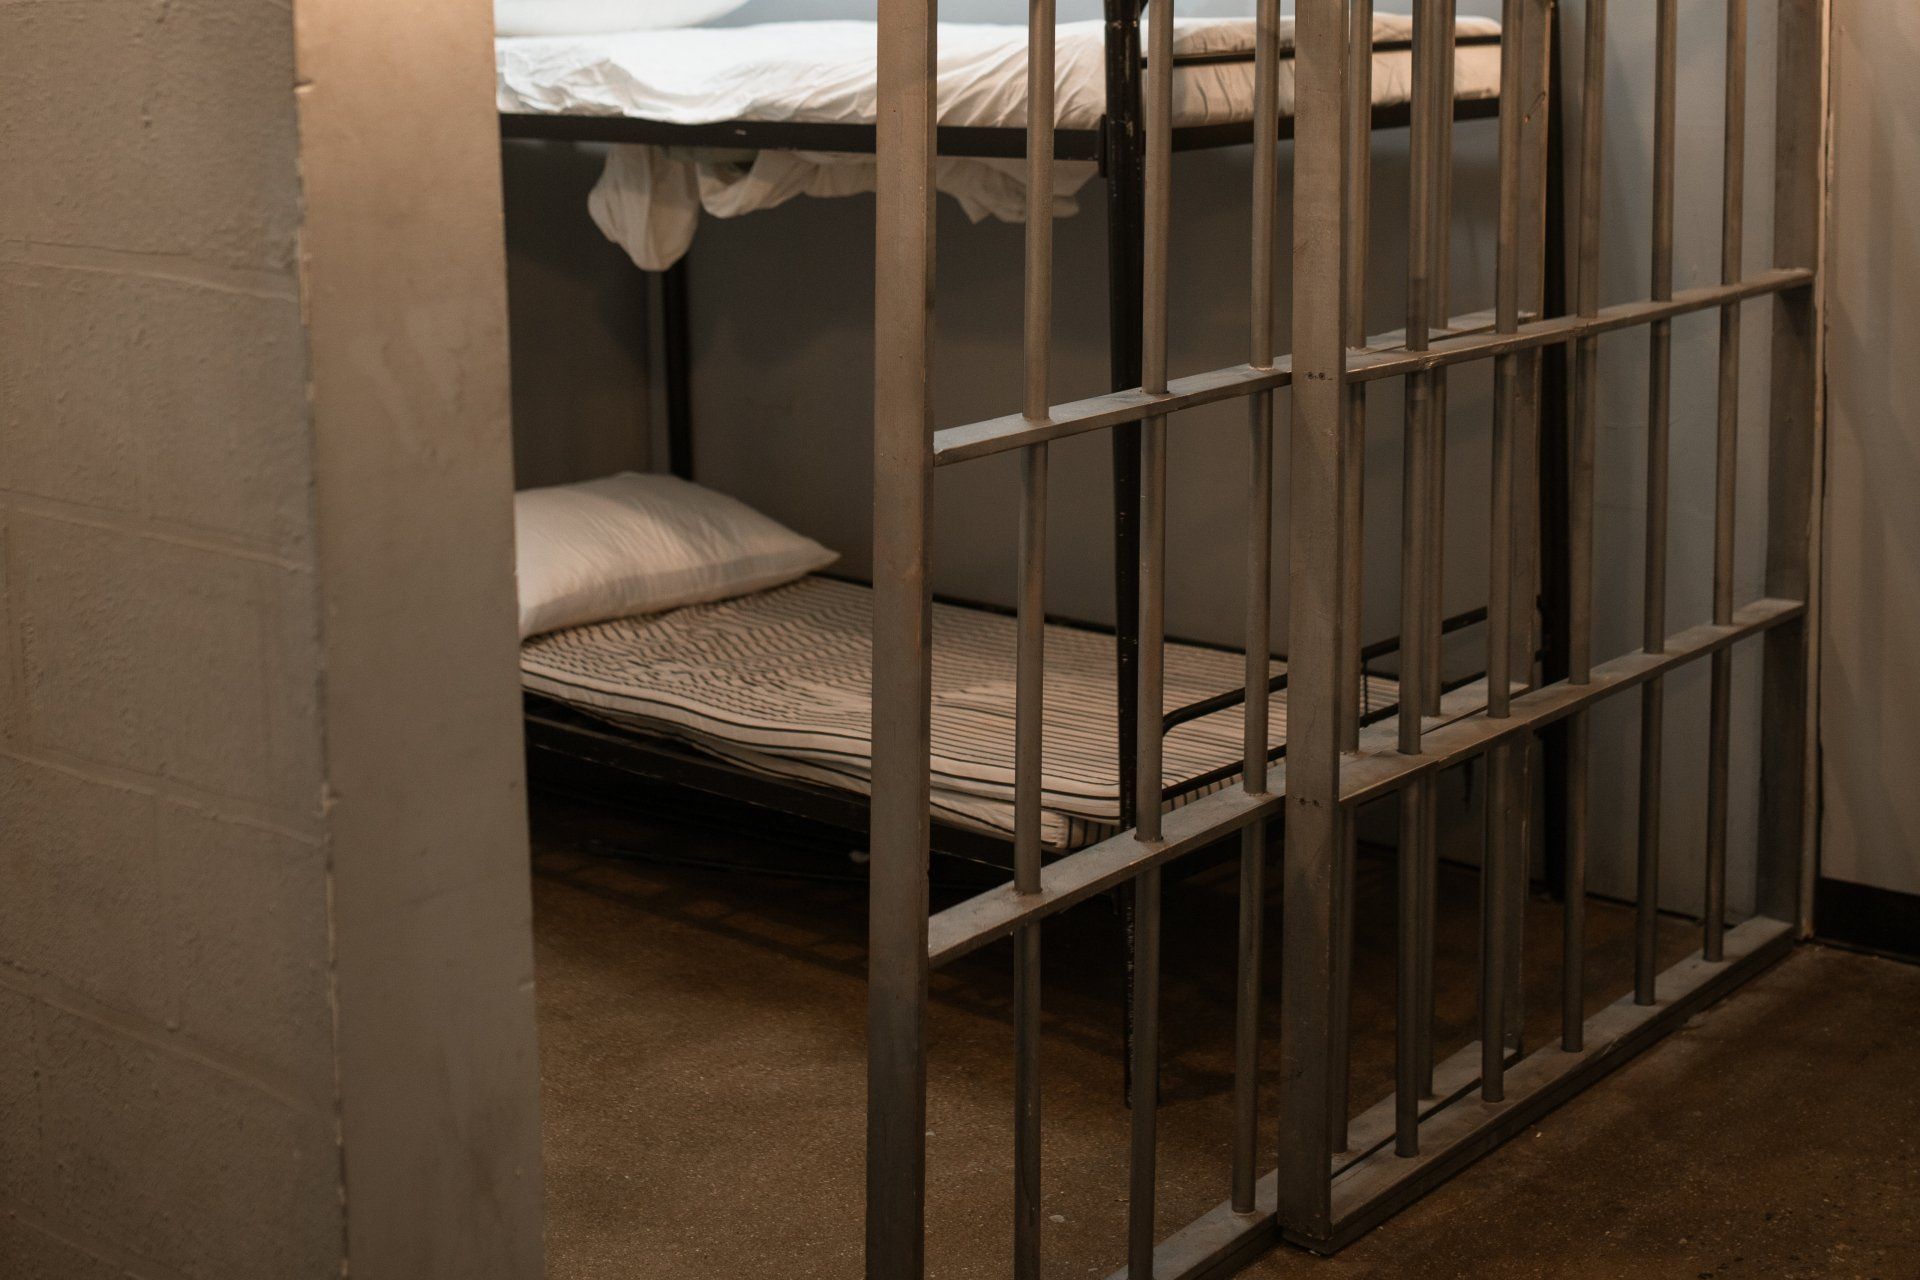 a jail cell in Maricopa County, Arizona.